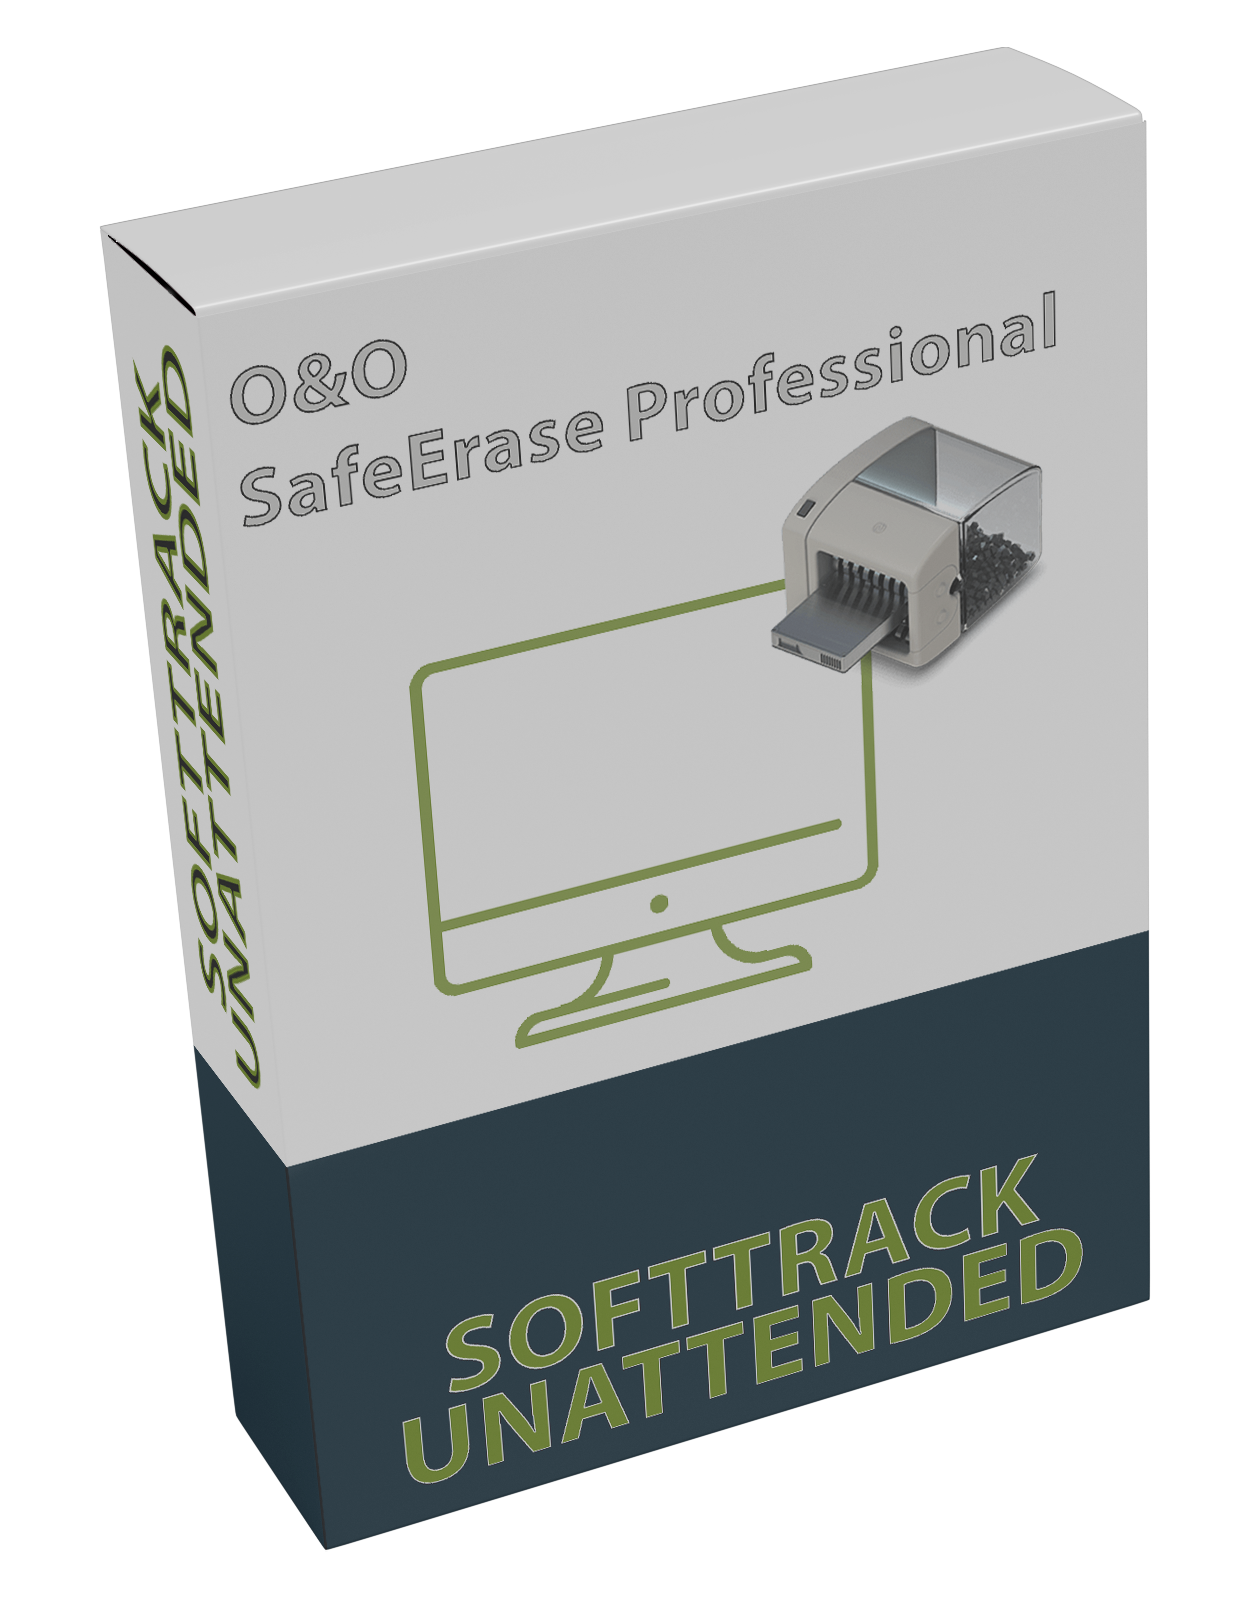 O&O SafeErase Professional 17.4.214 UNATTENDED